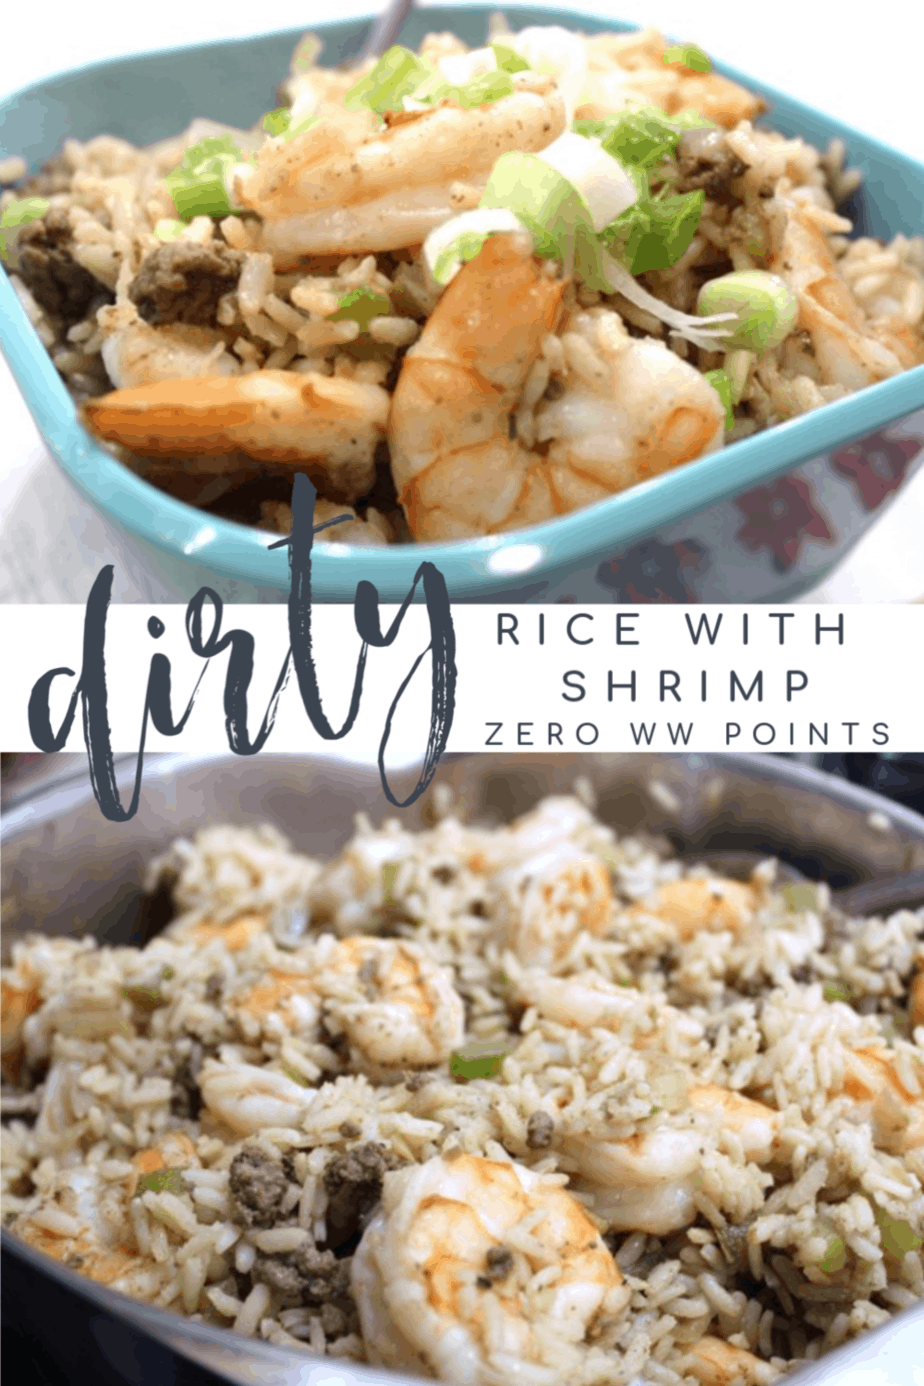 Weight Watchers Shrimp Recipe: Dirty Rice